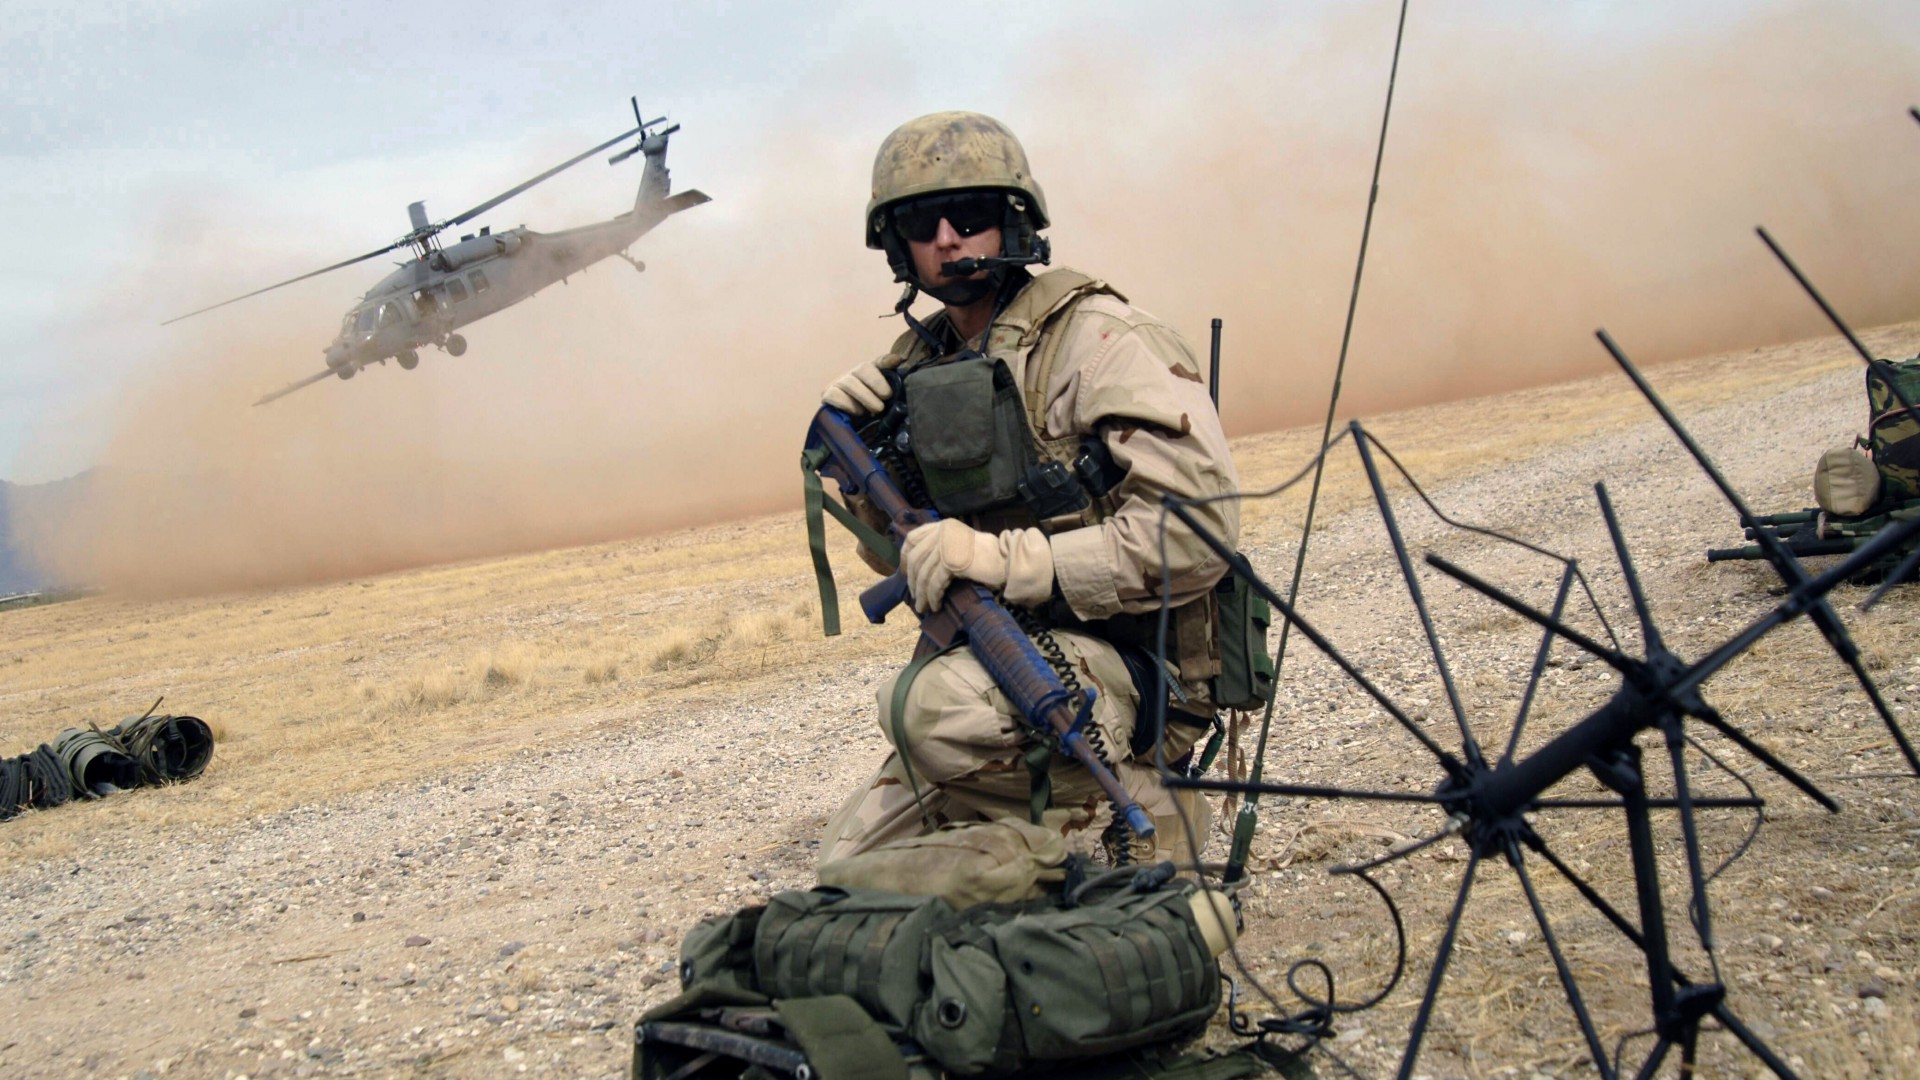 ВВС США, соладт, спасательная операция, U.S. Air Force, soldier, assault rifle, rescue mission, helicopter landing (horizontal)